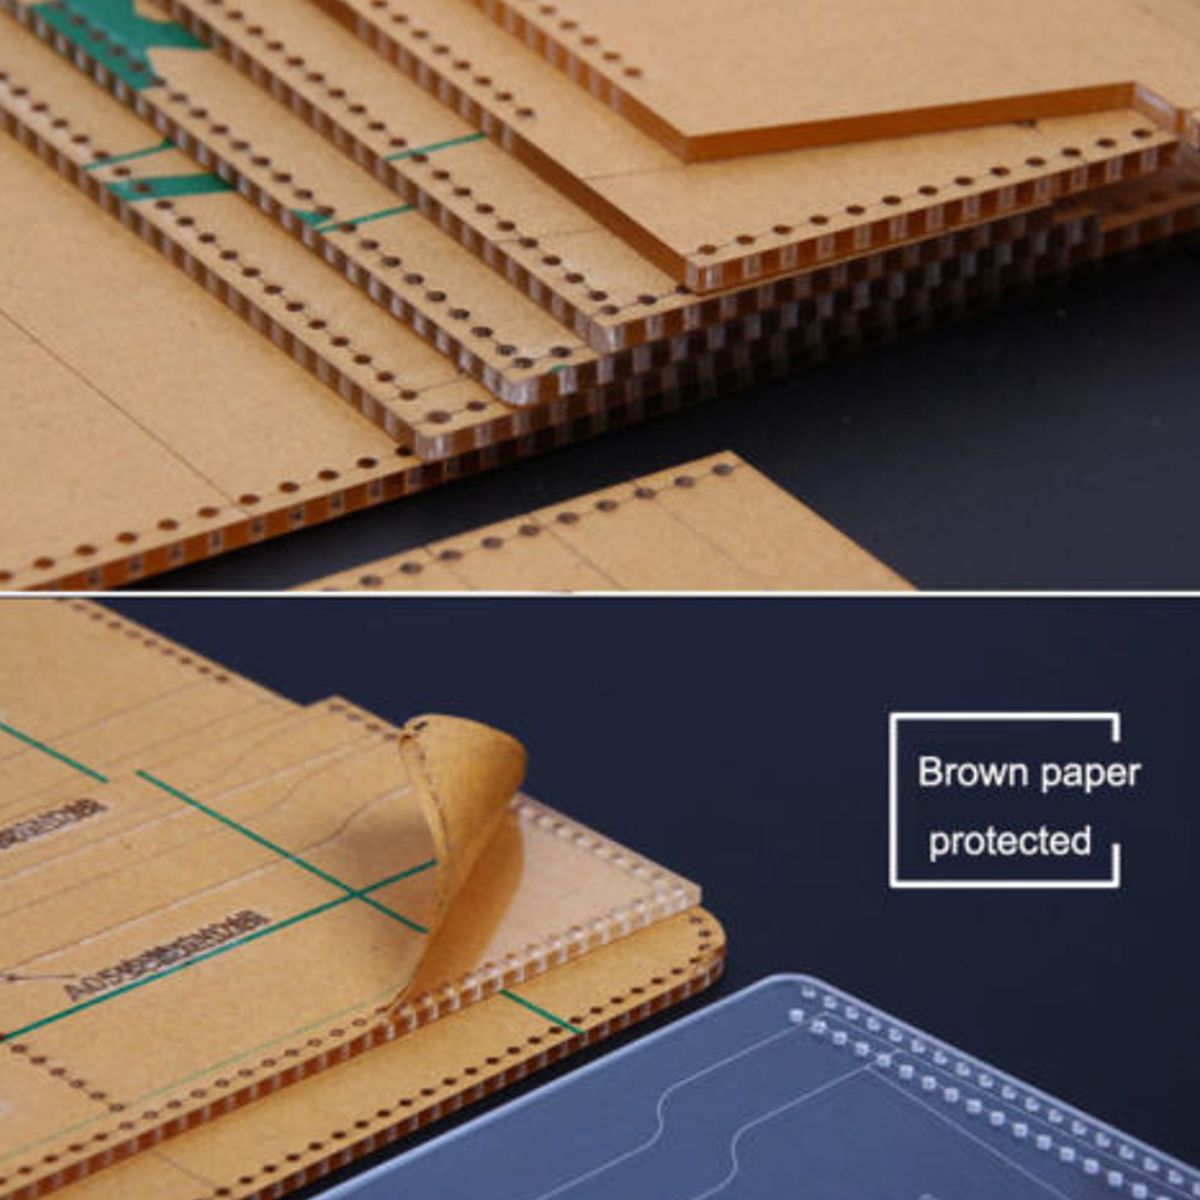 Acrylic-Bag-Pattern-Stencil-Template-Shoulder-Bag-Handmade-Leather-Craft-Tool-DIY-Template-Set-1356059